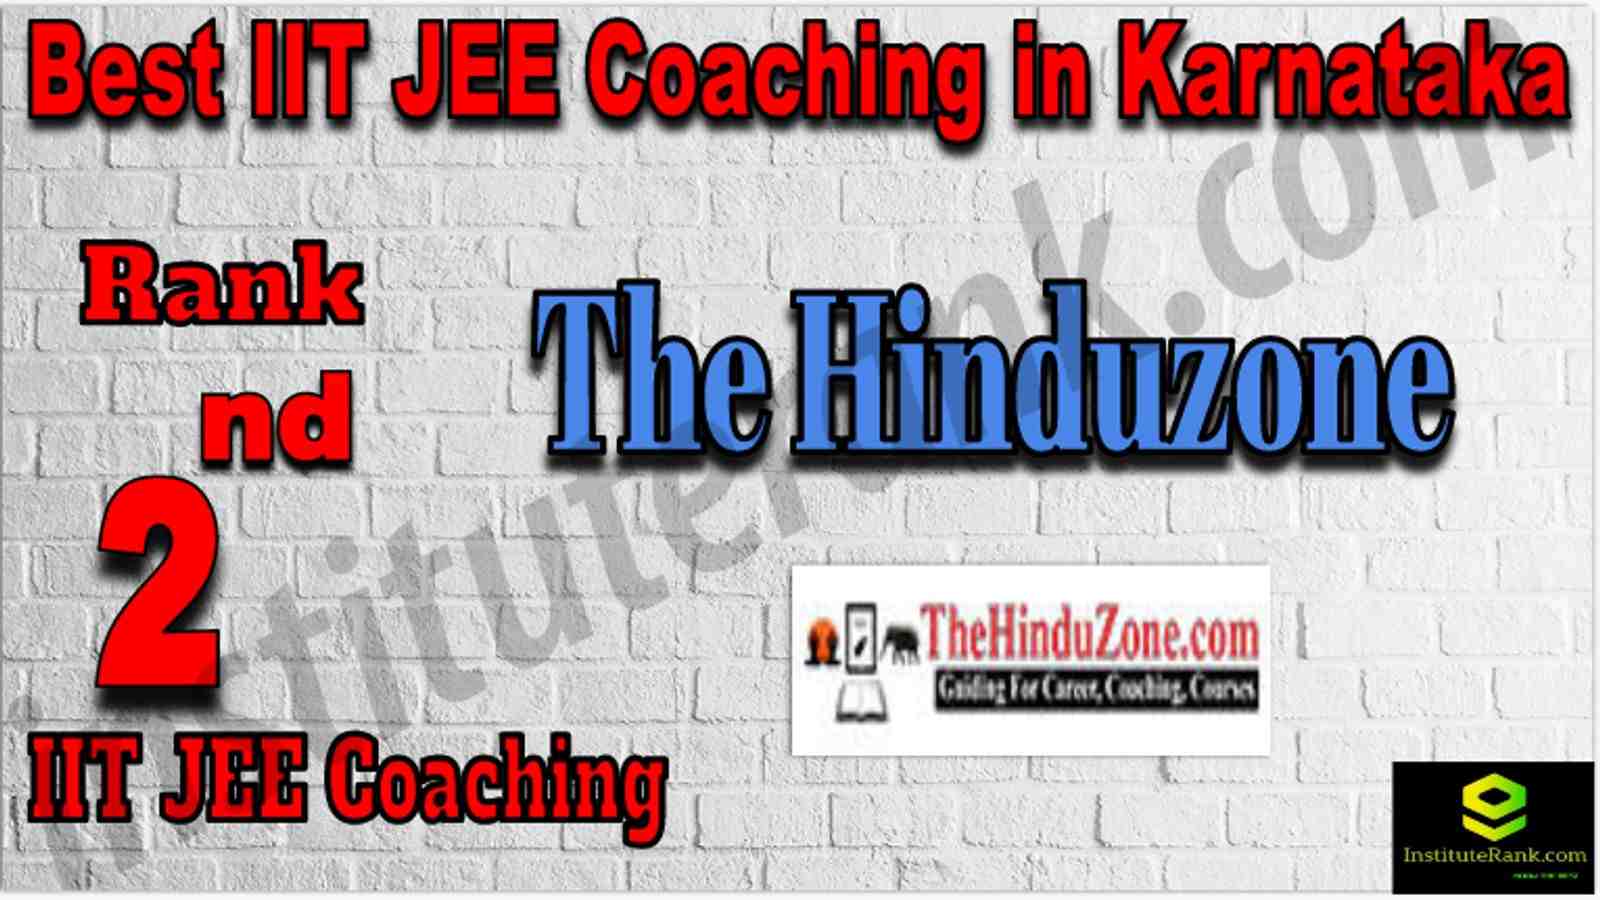 Rank 2nd Best IIT JEE Coaching in Karnataka